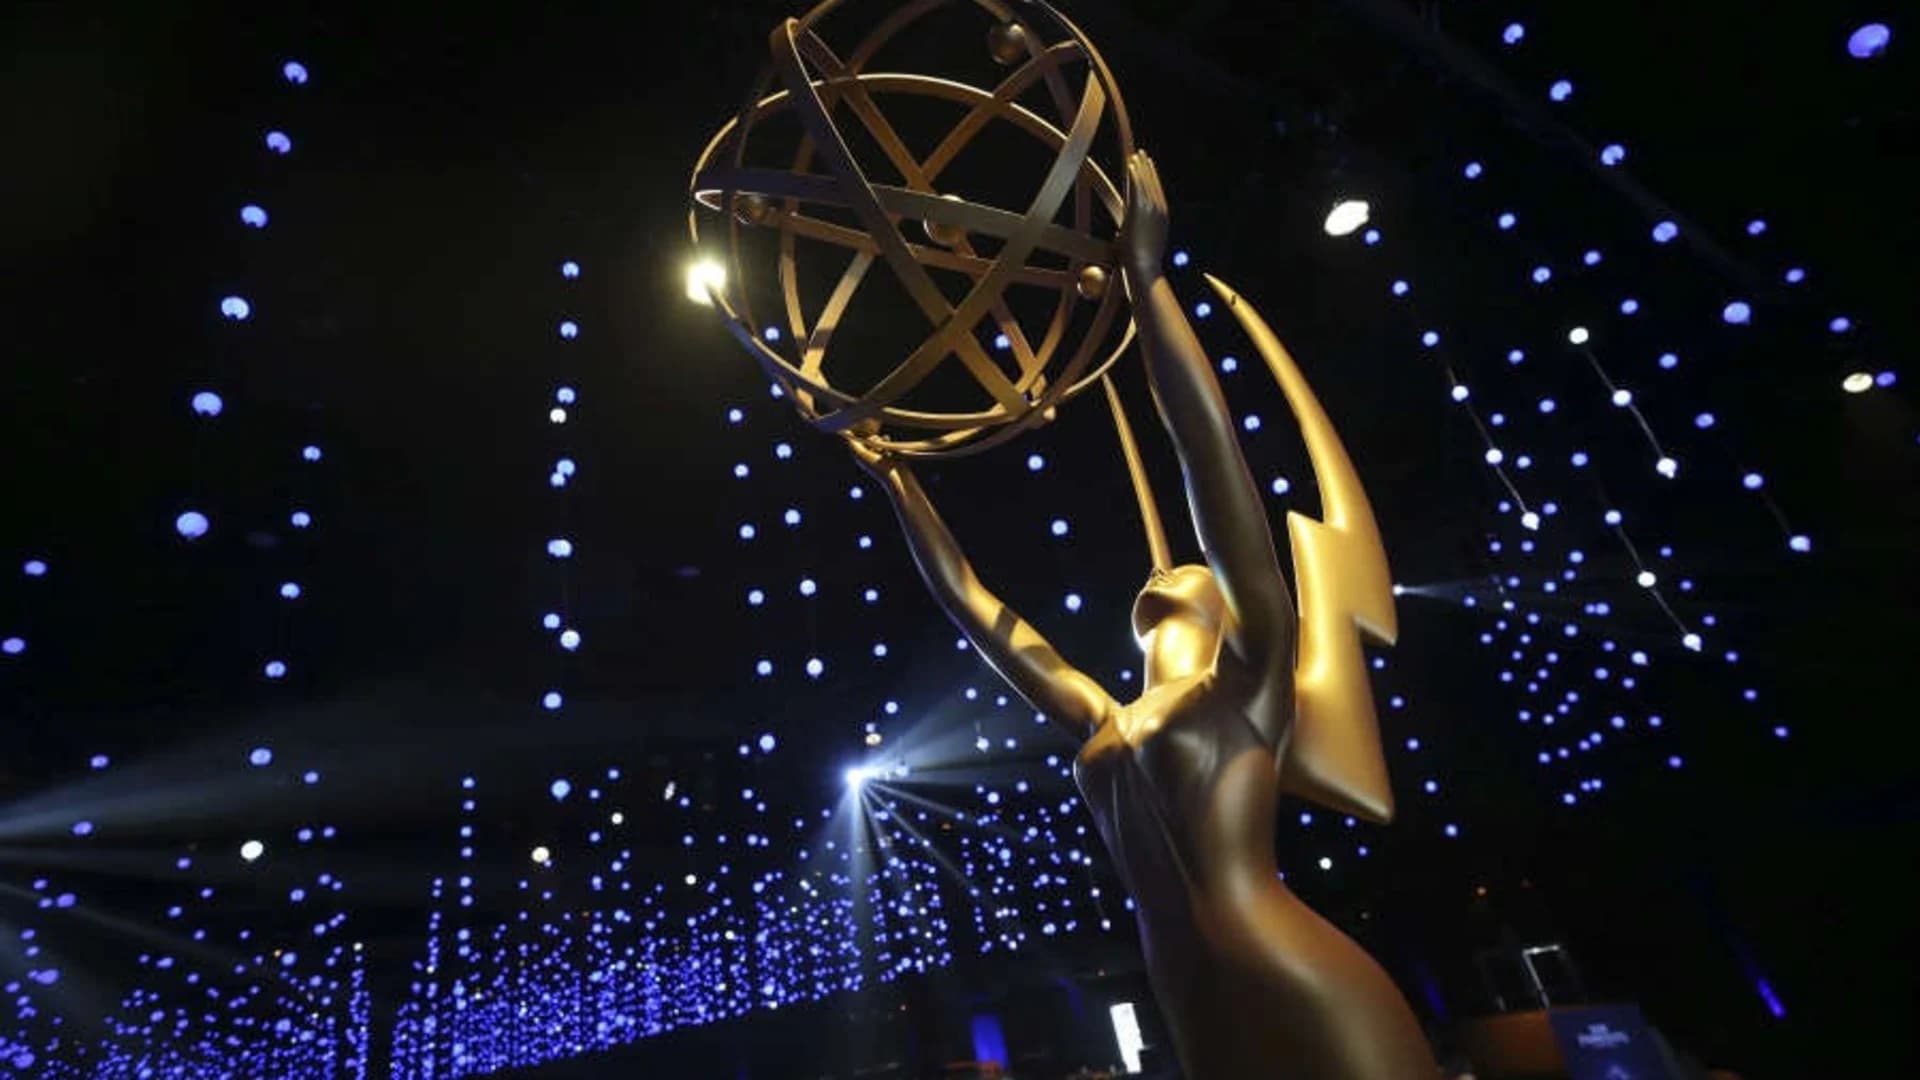 News 12 Westchester/Hudson Valley receives 27 New York Emmy nominations